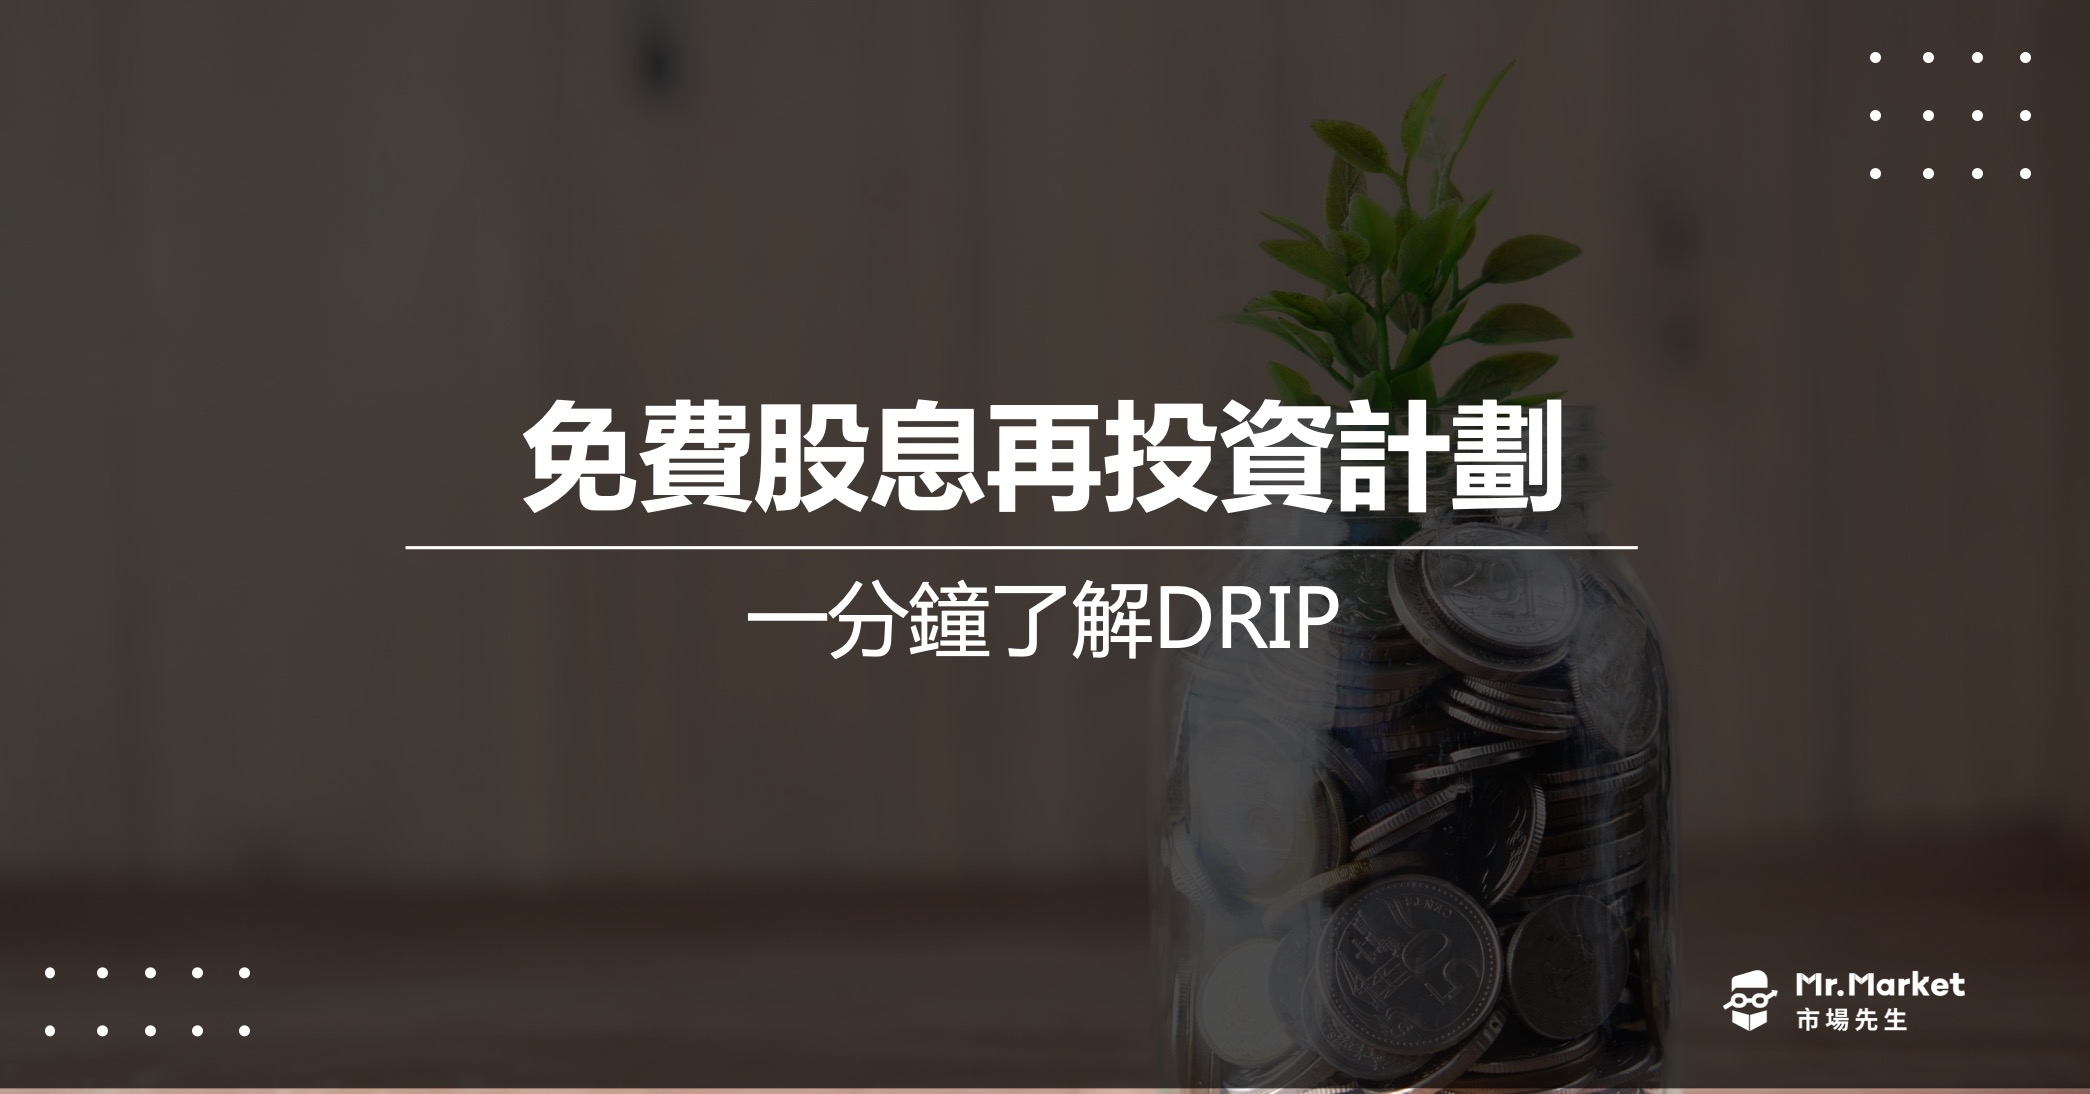 DRIP-免費股息再投資計劃